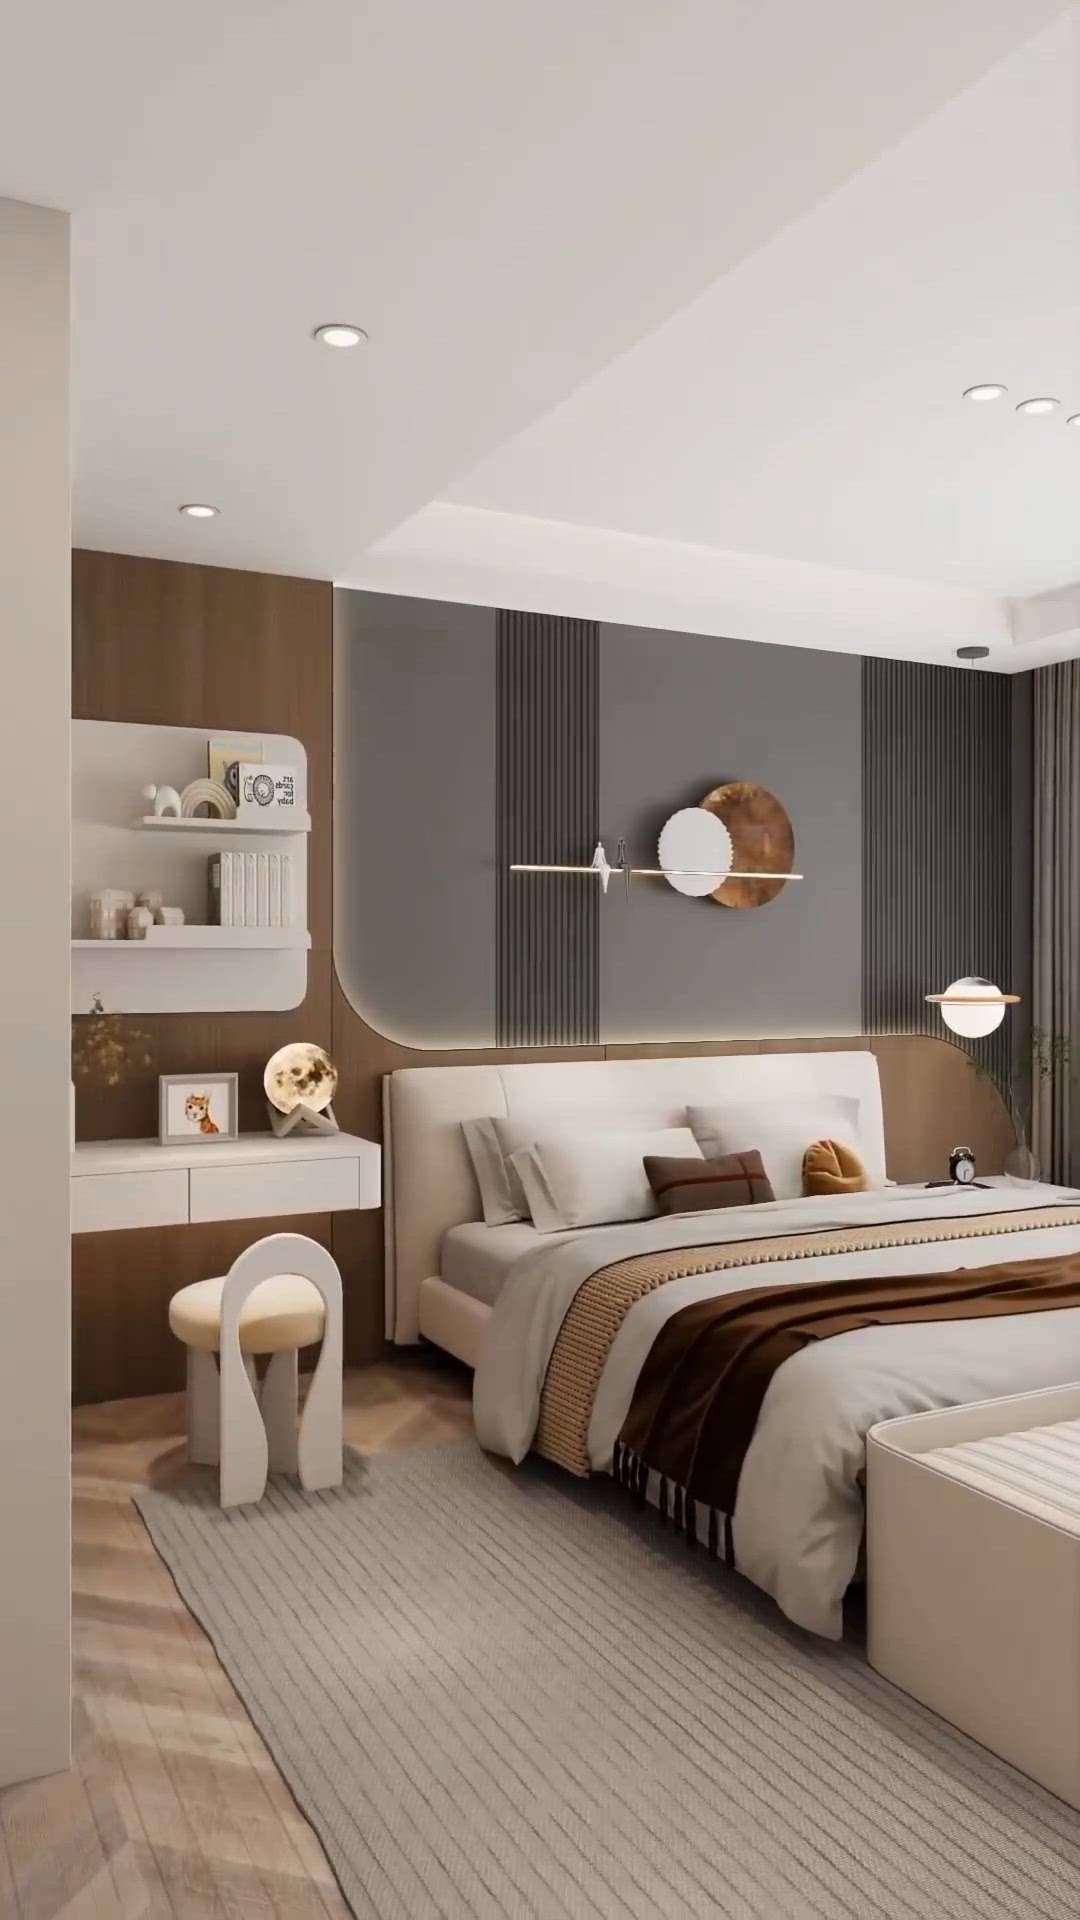 #InteriorDesigner #BedroomDesigns #Sofas #Beds #furnitures #ModularKitchen #modularwardrobe #Modularfurniture #DiningTable